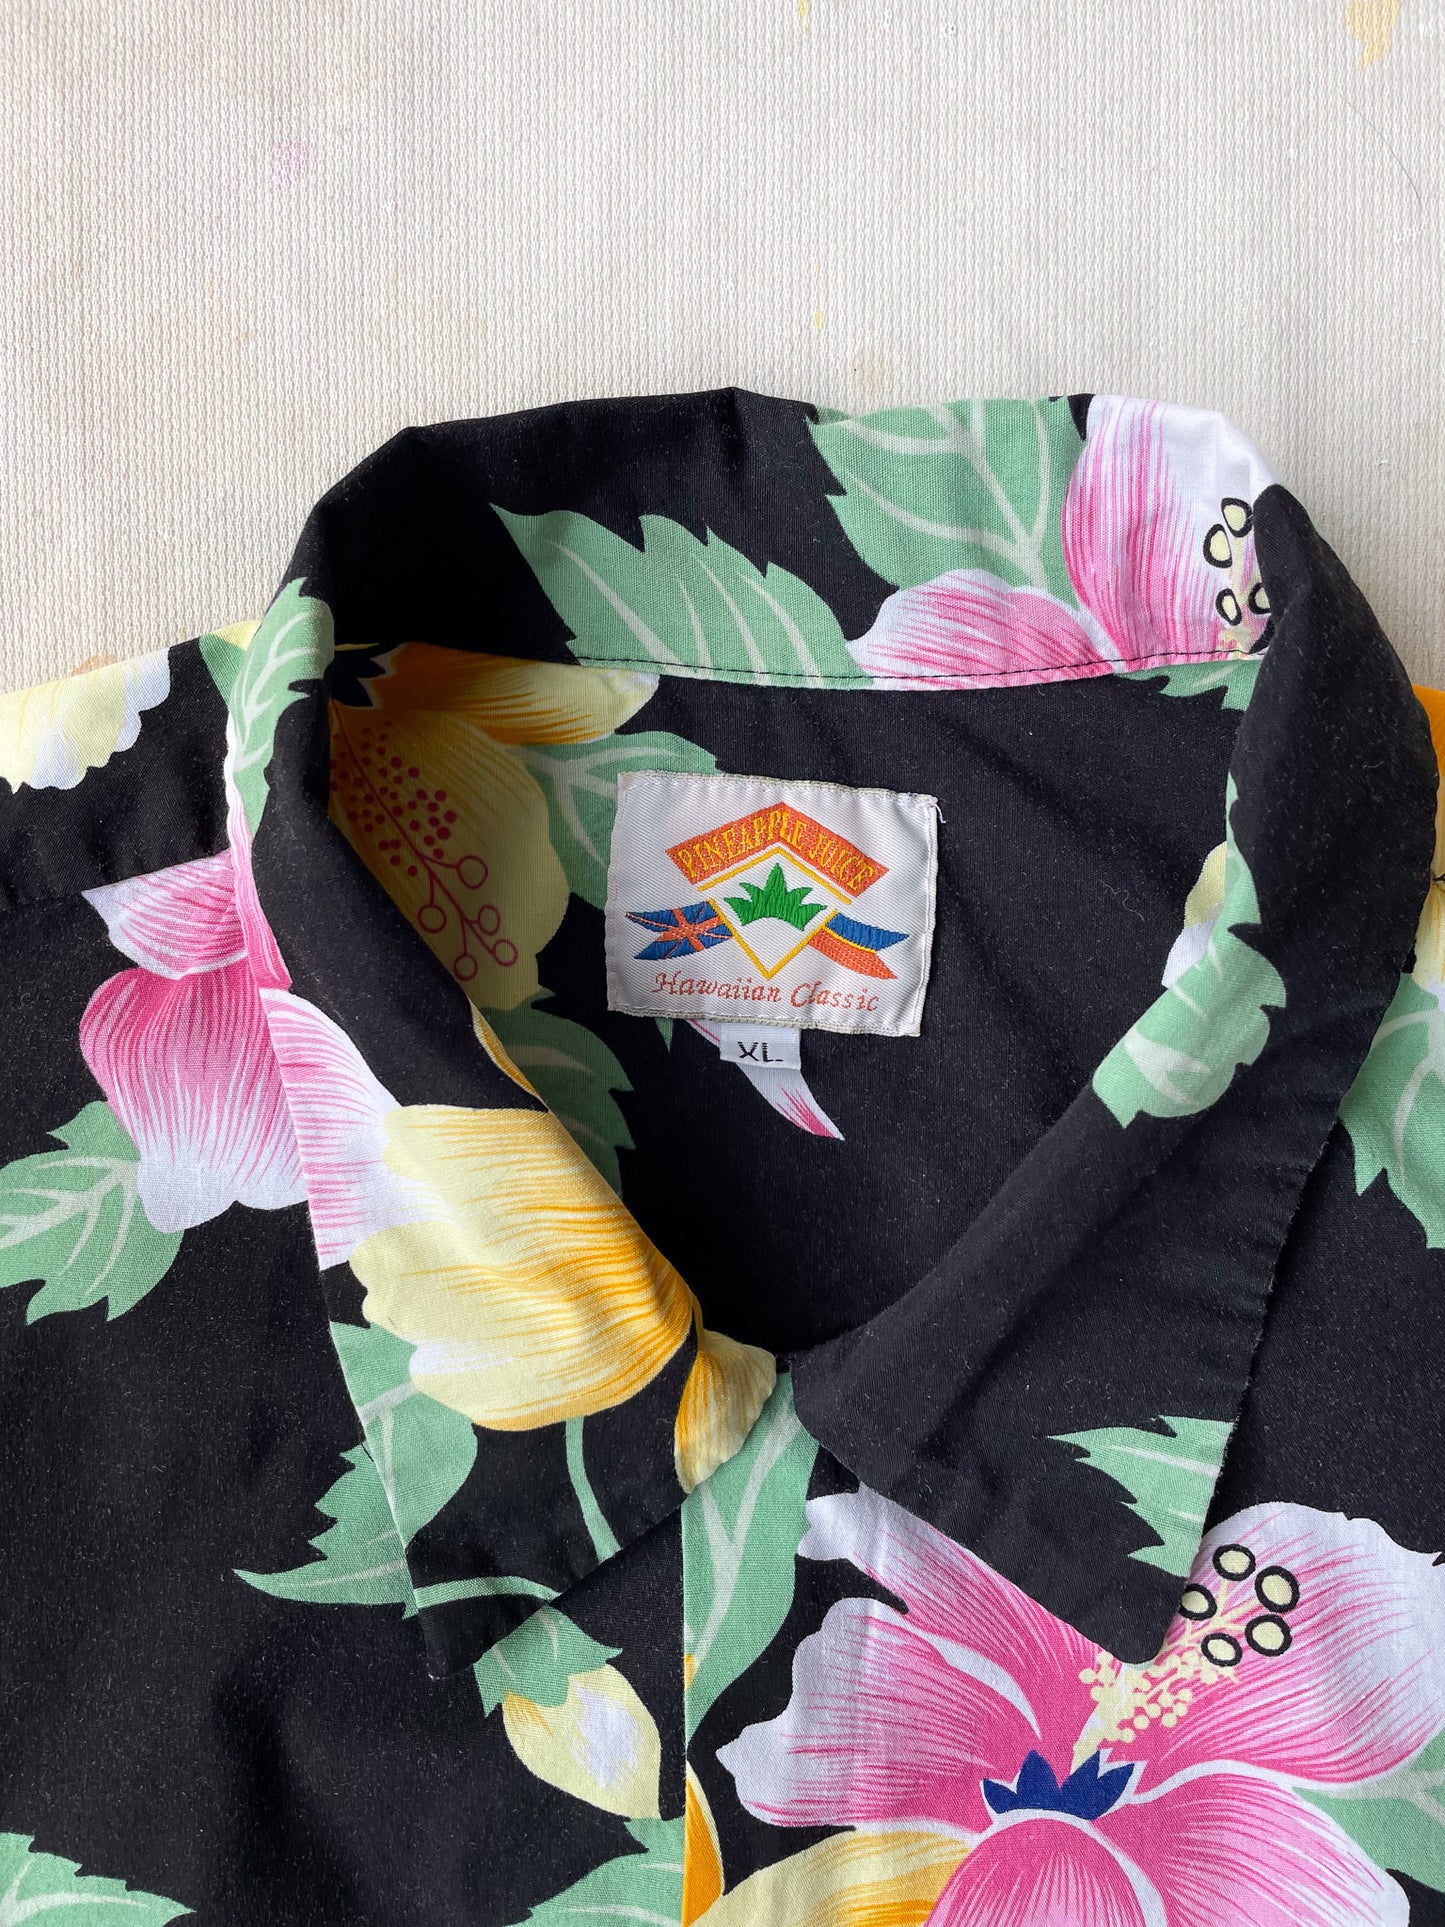 Black Hawaiian Floral Shirt—[XL]